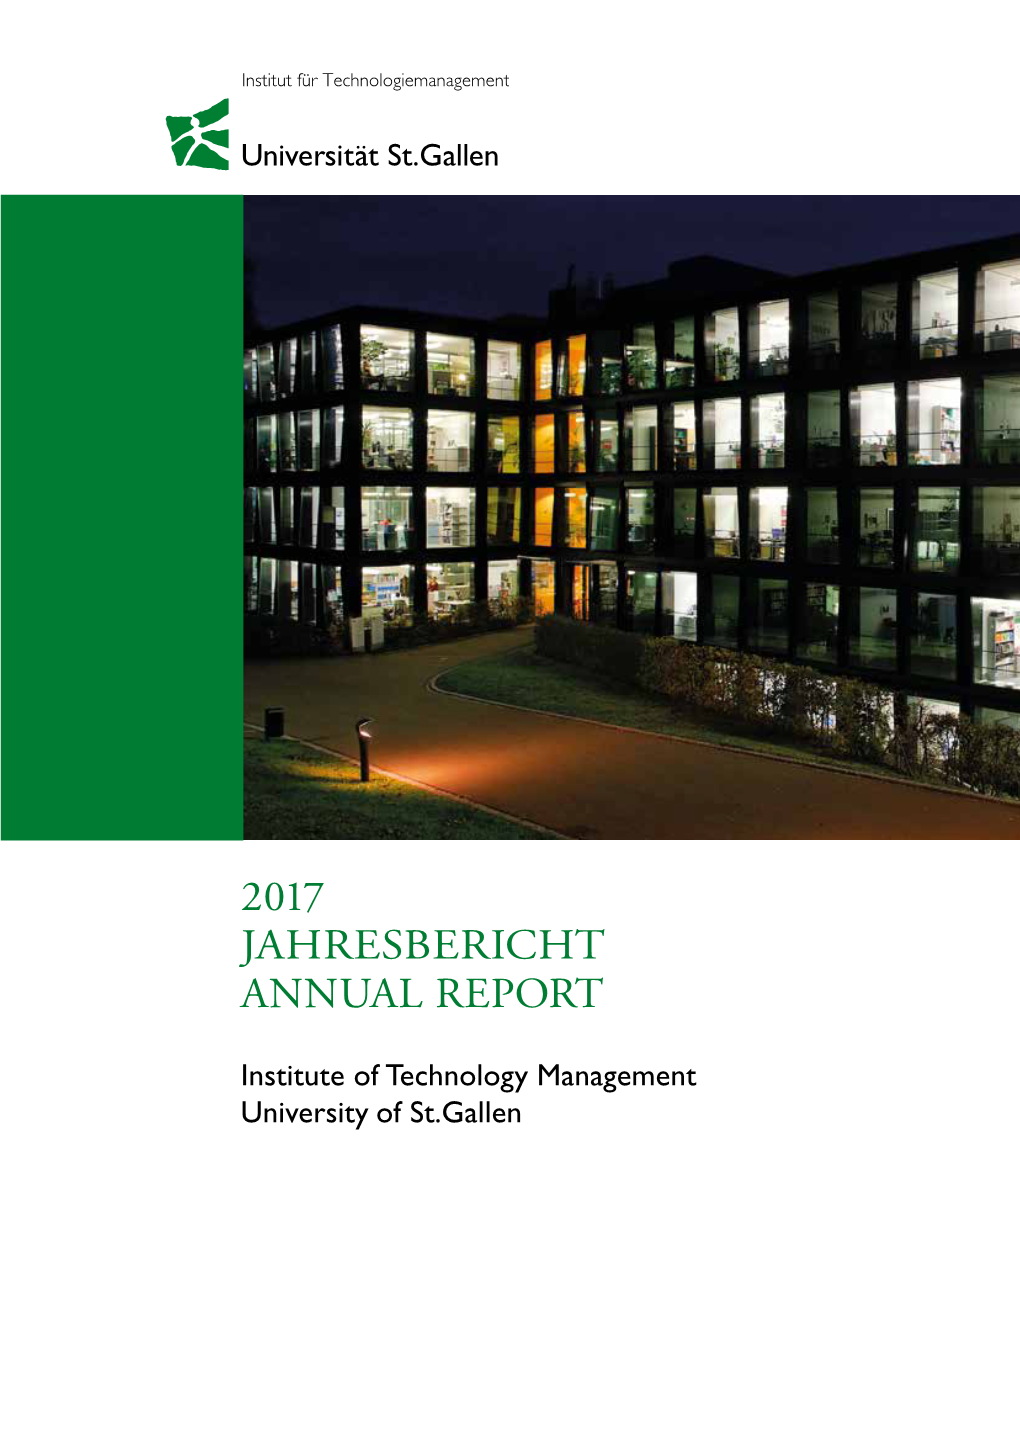 2017 Jahresbericht Annual Report